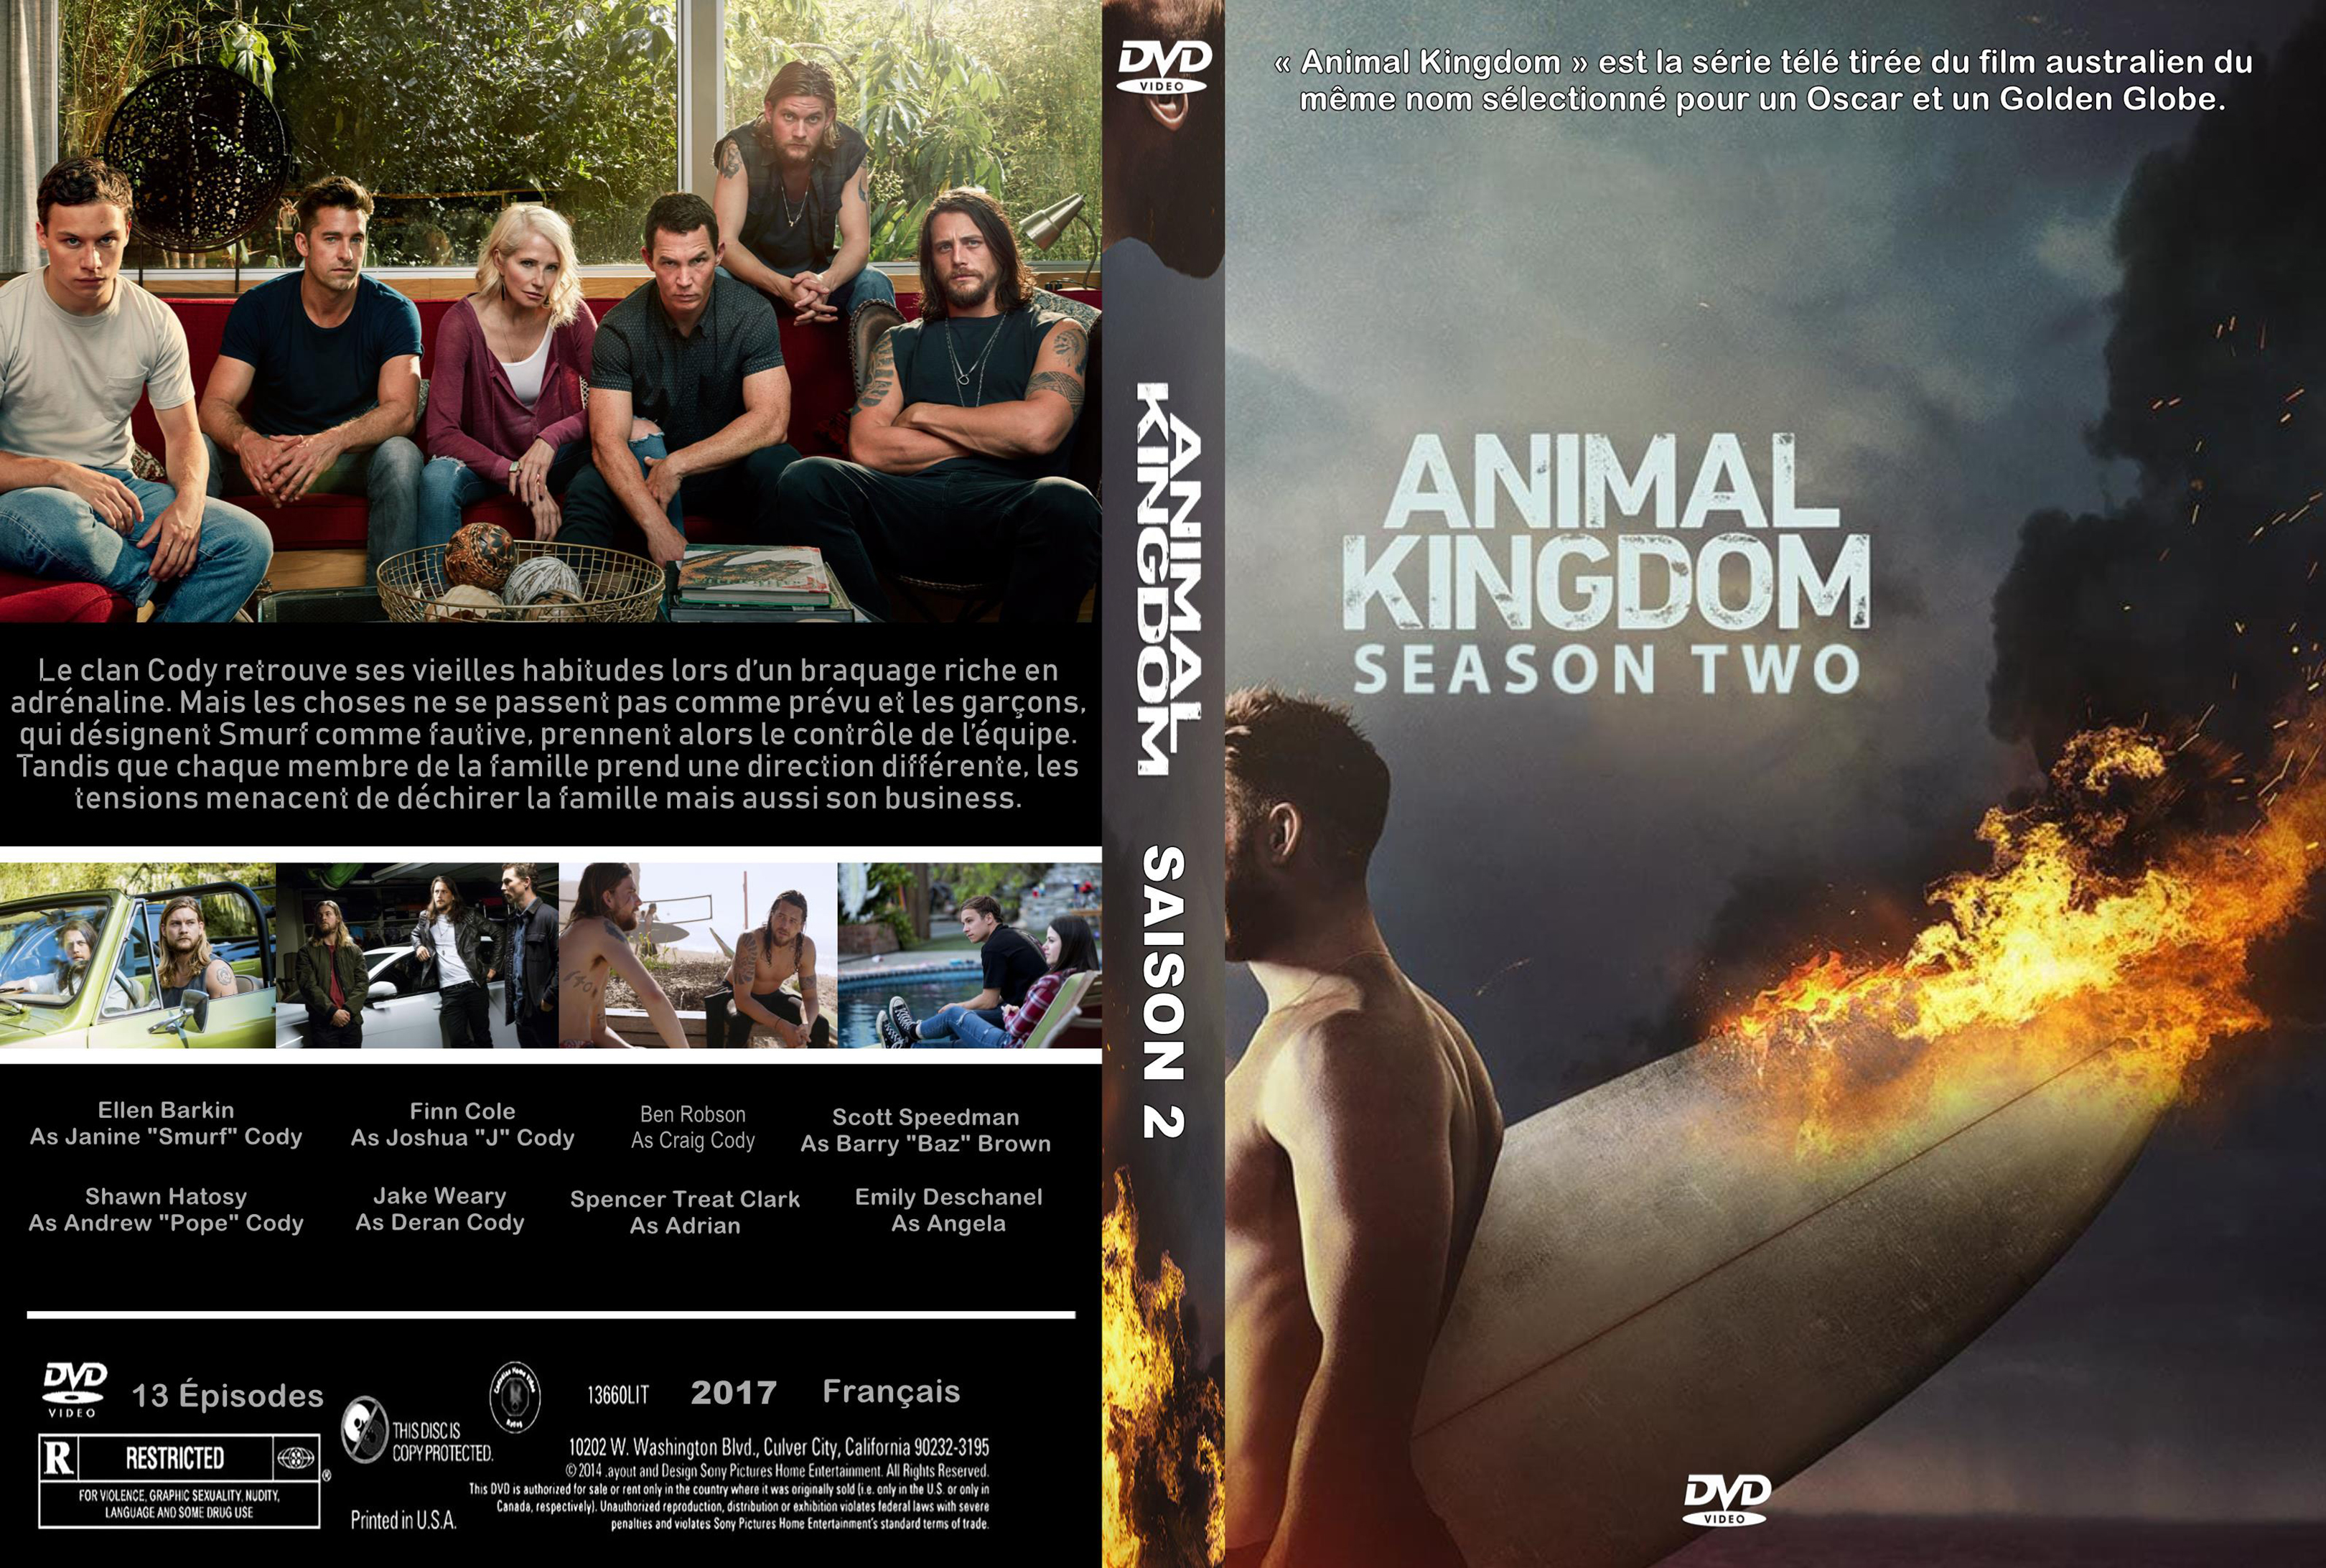 Jaquette DVD Animal Kingdom saison 2 custom